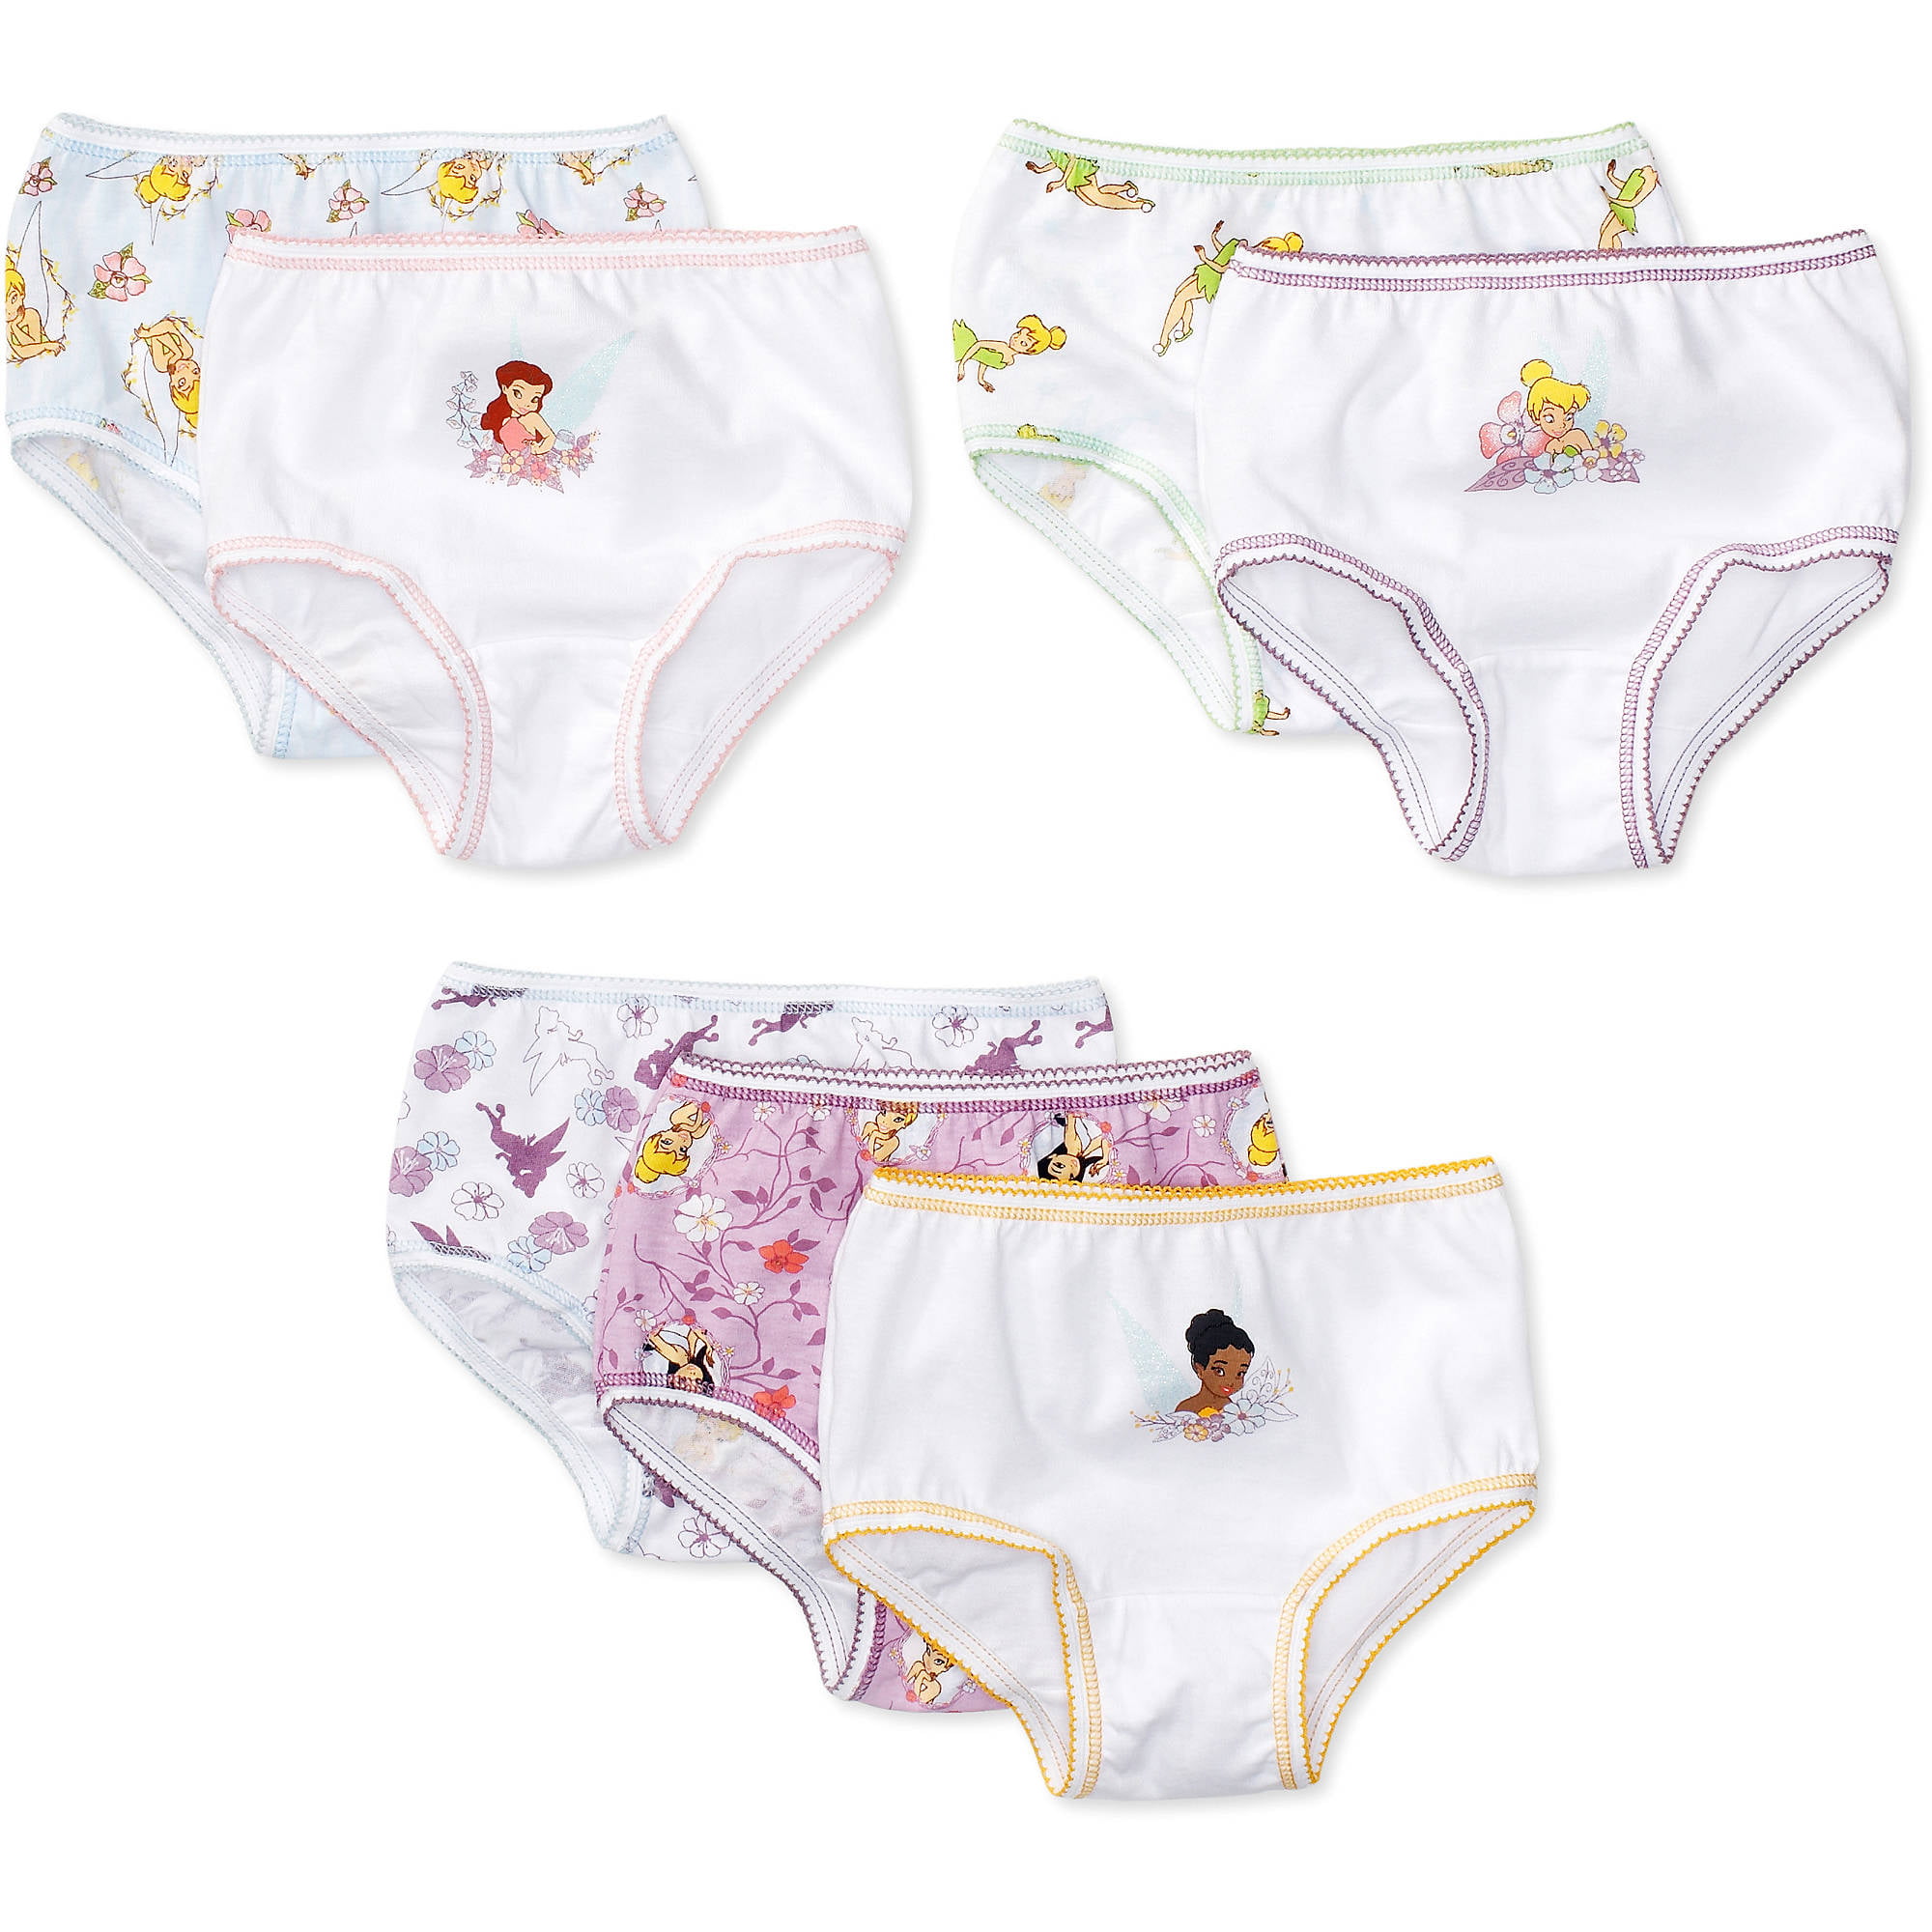 Disney Fairies Tinker Bell Underwear, 7-Pack (Toddler Girls